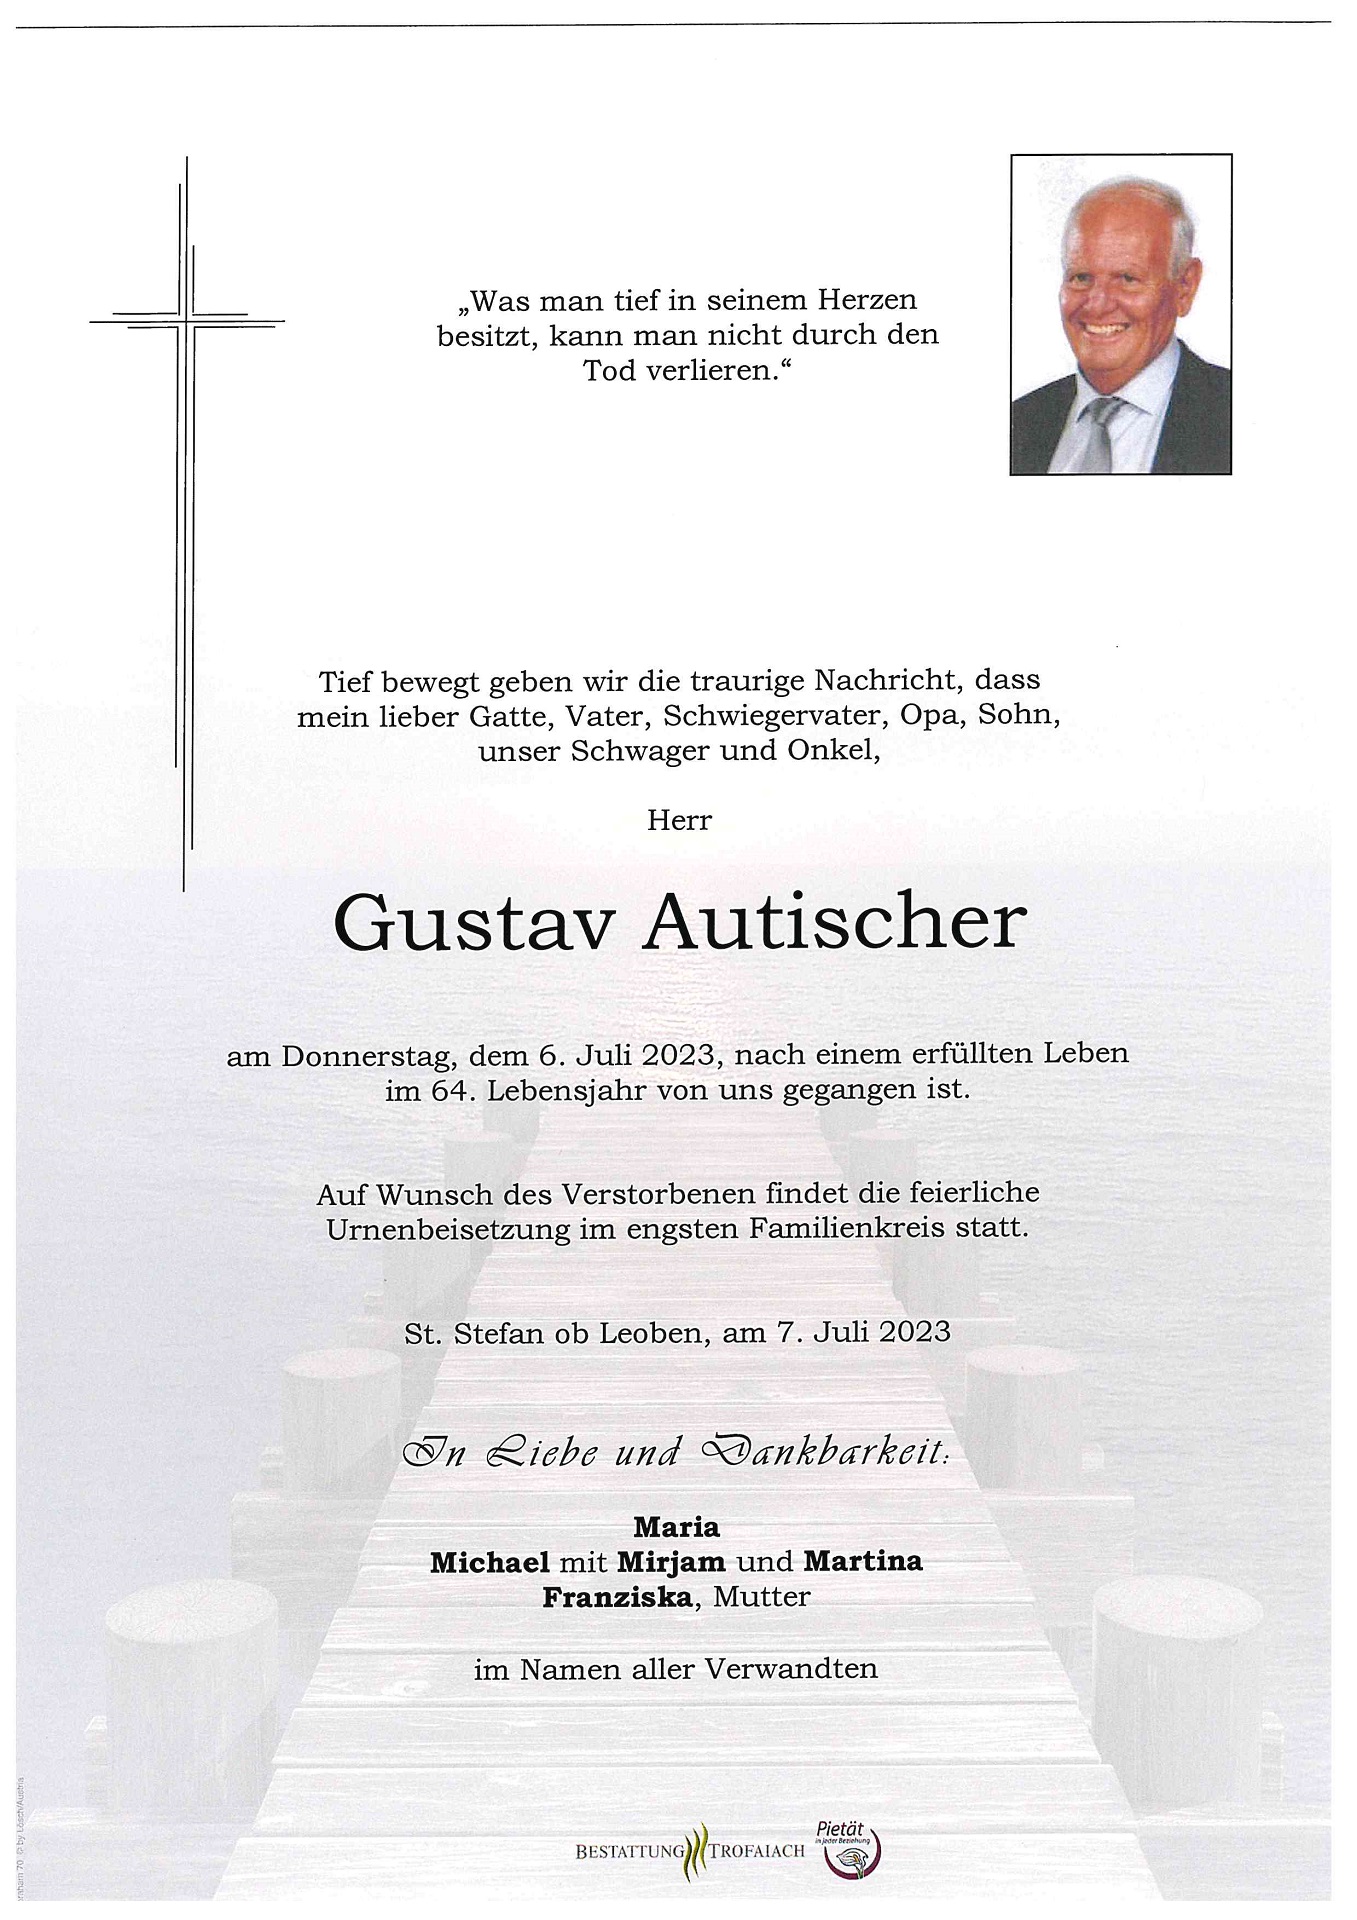 Autischer Gustav